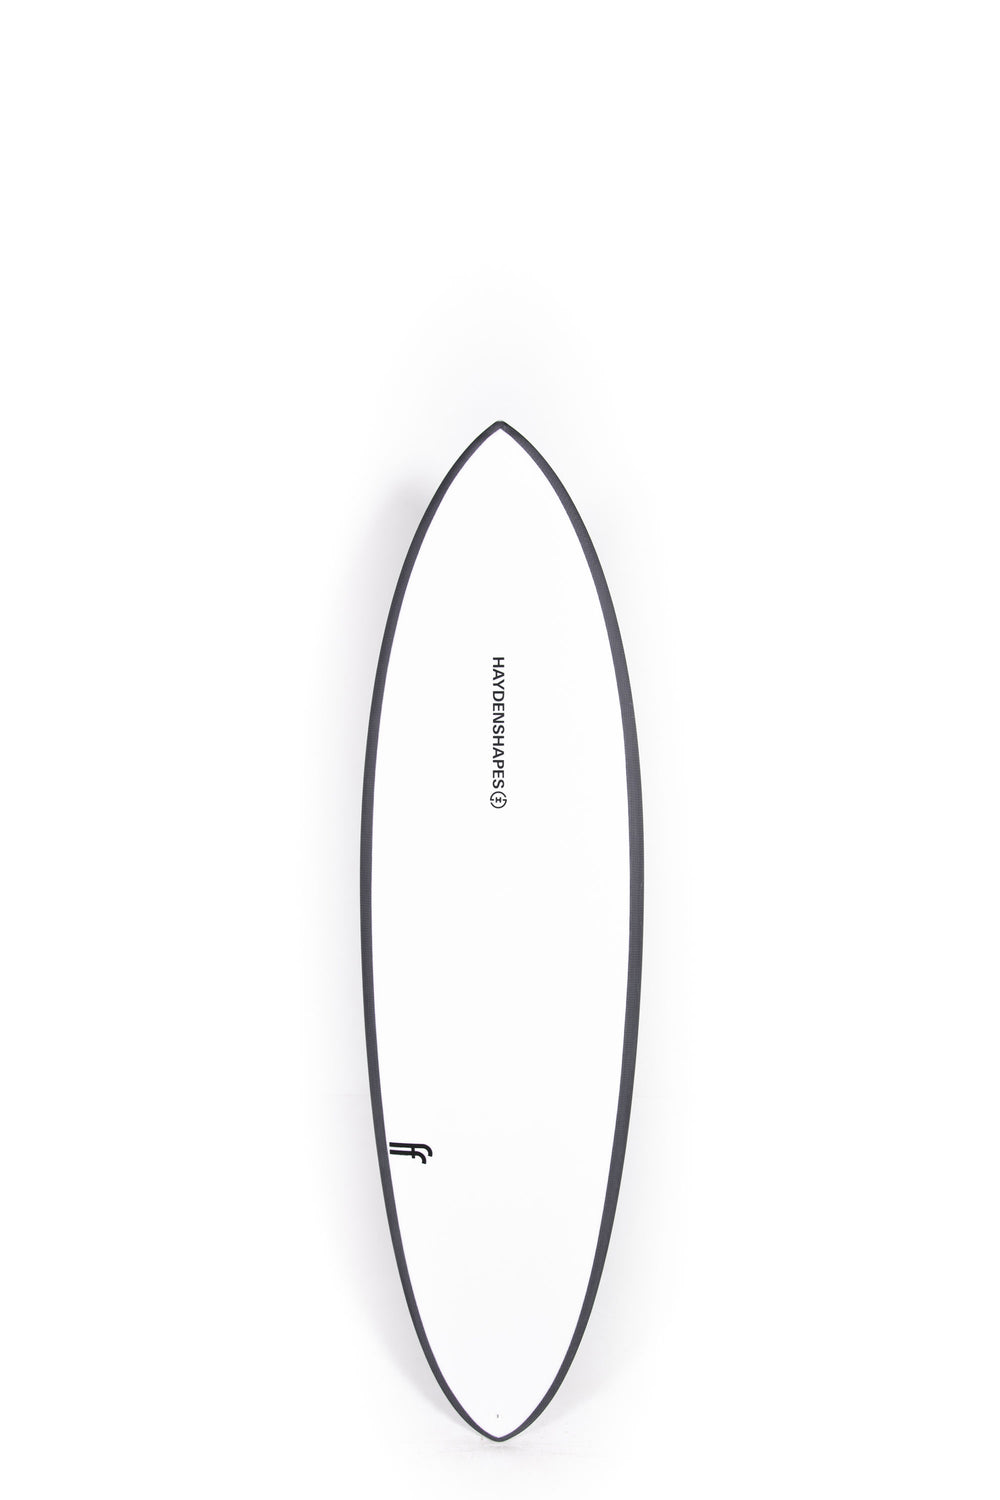 Pukas-Surf-Shop-HS-Surfboards-Hypto-Krypto-6_8_-02-Clear